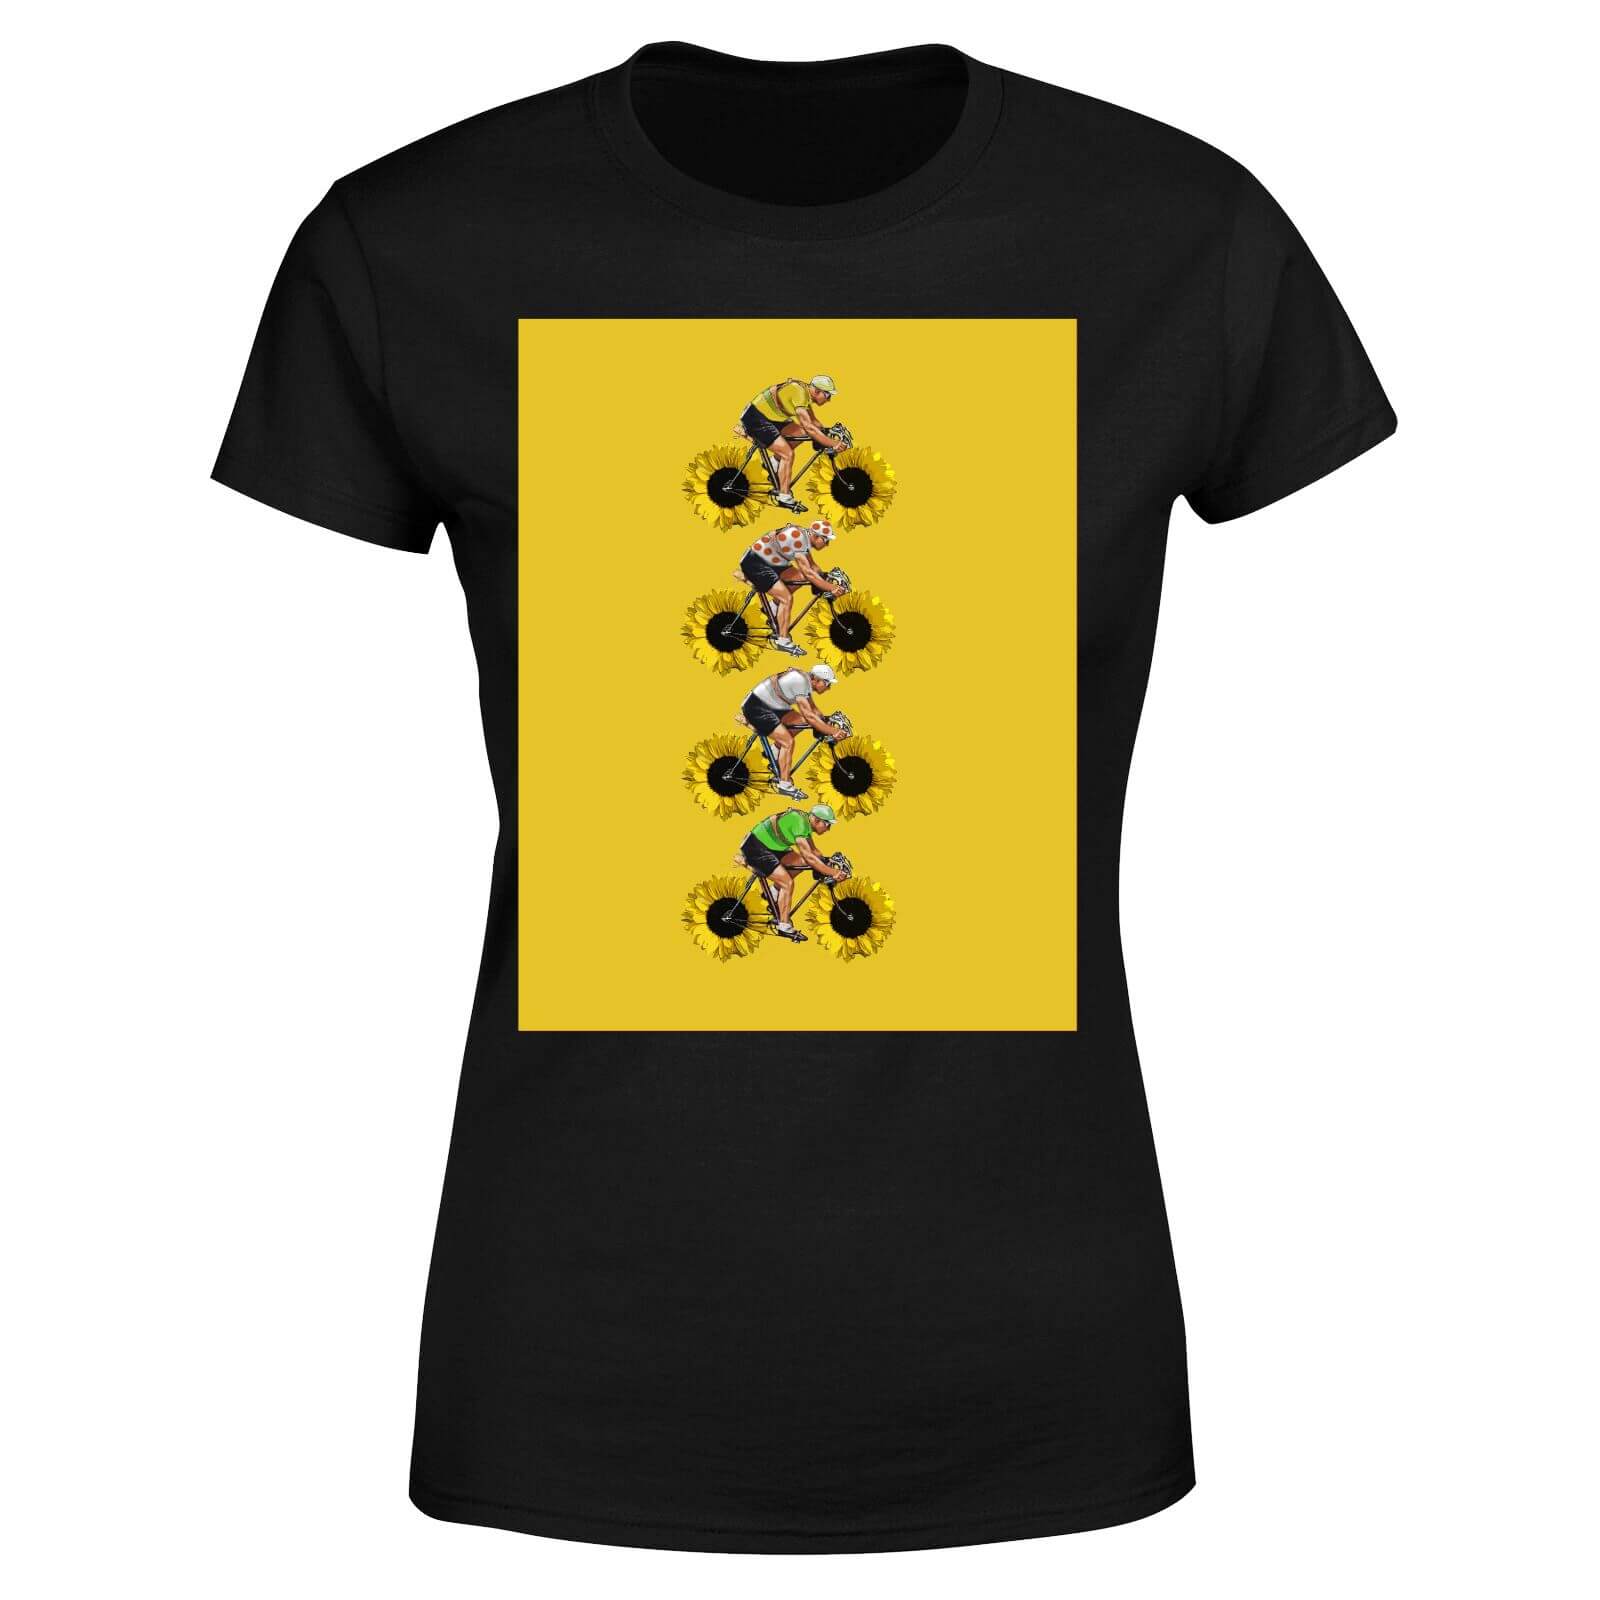 TDF Maillots Women's T-Shirt - Black - XXL - Black